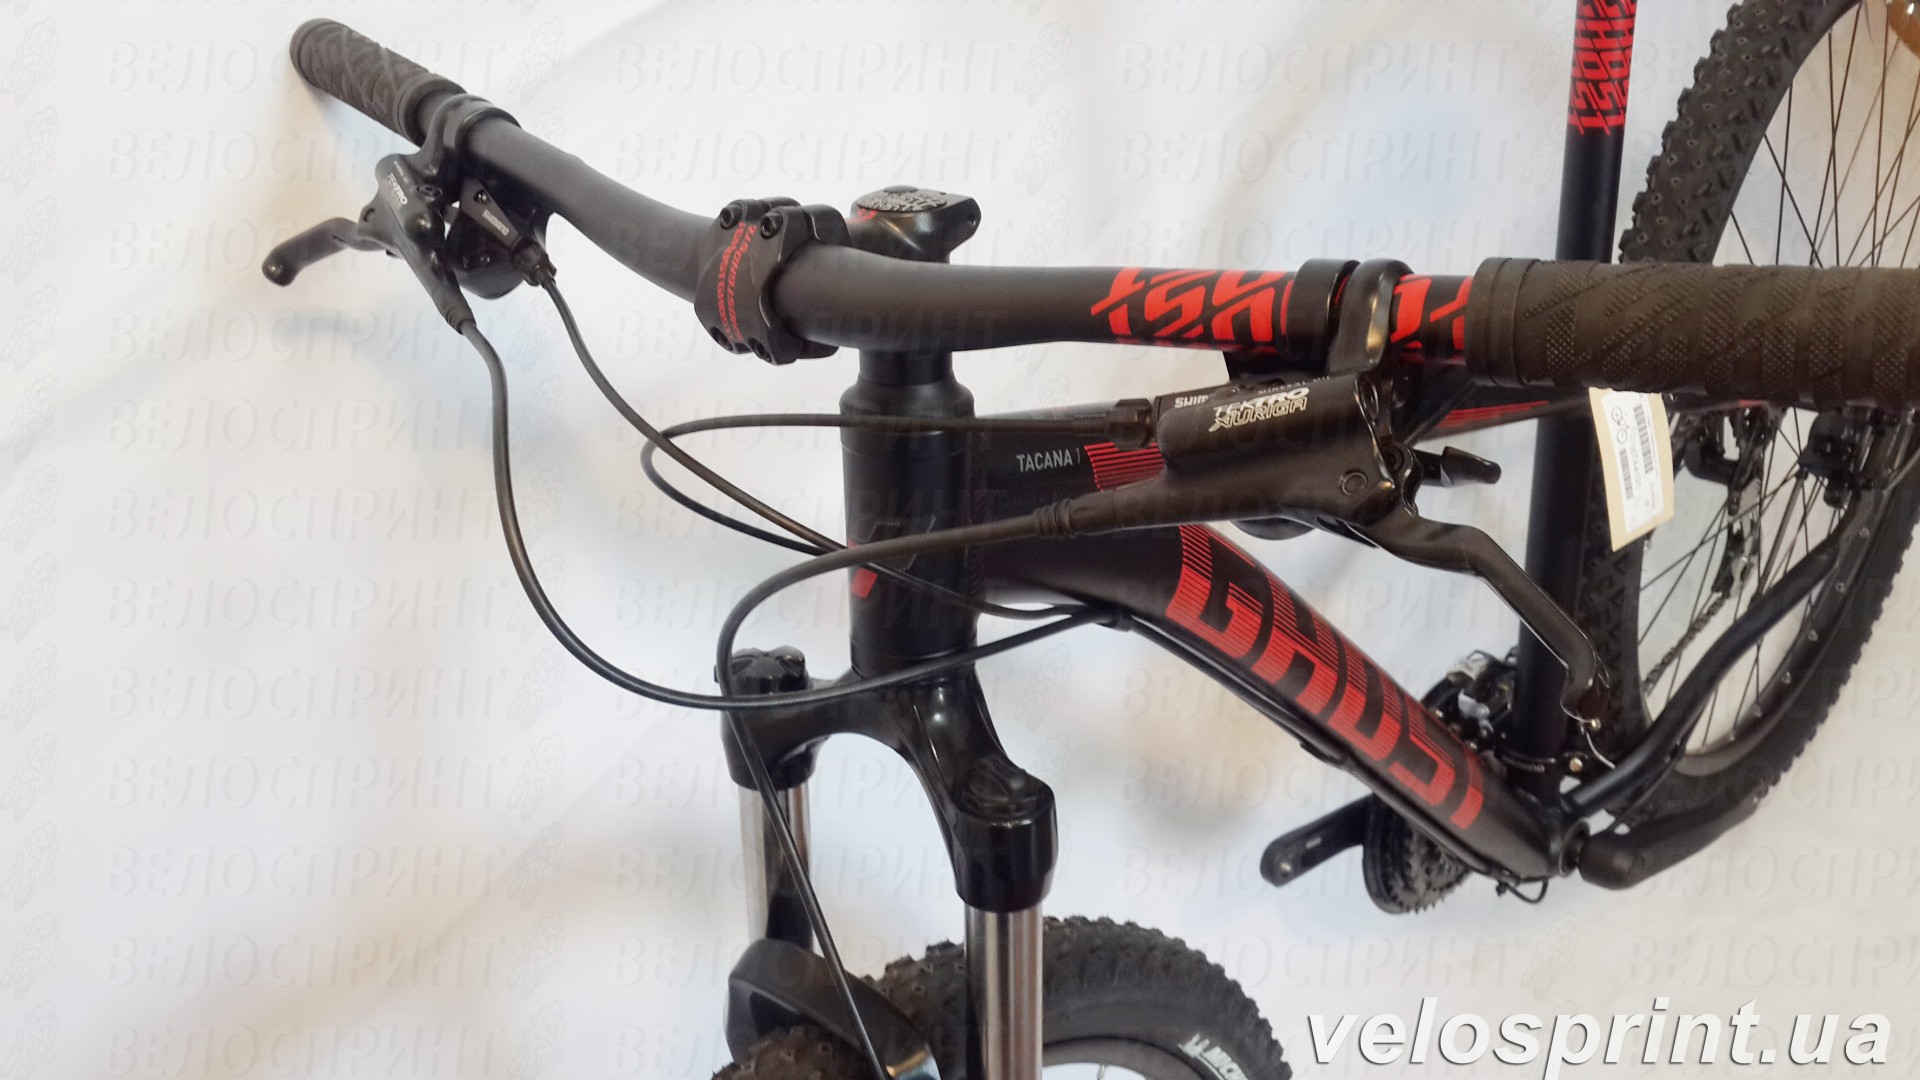 Велосипед GHOST Tacana 1 black/red/grey руль год 2016